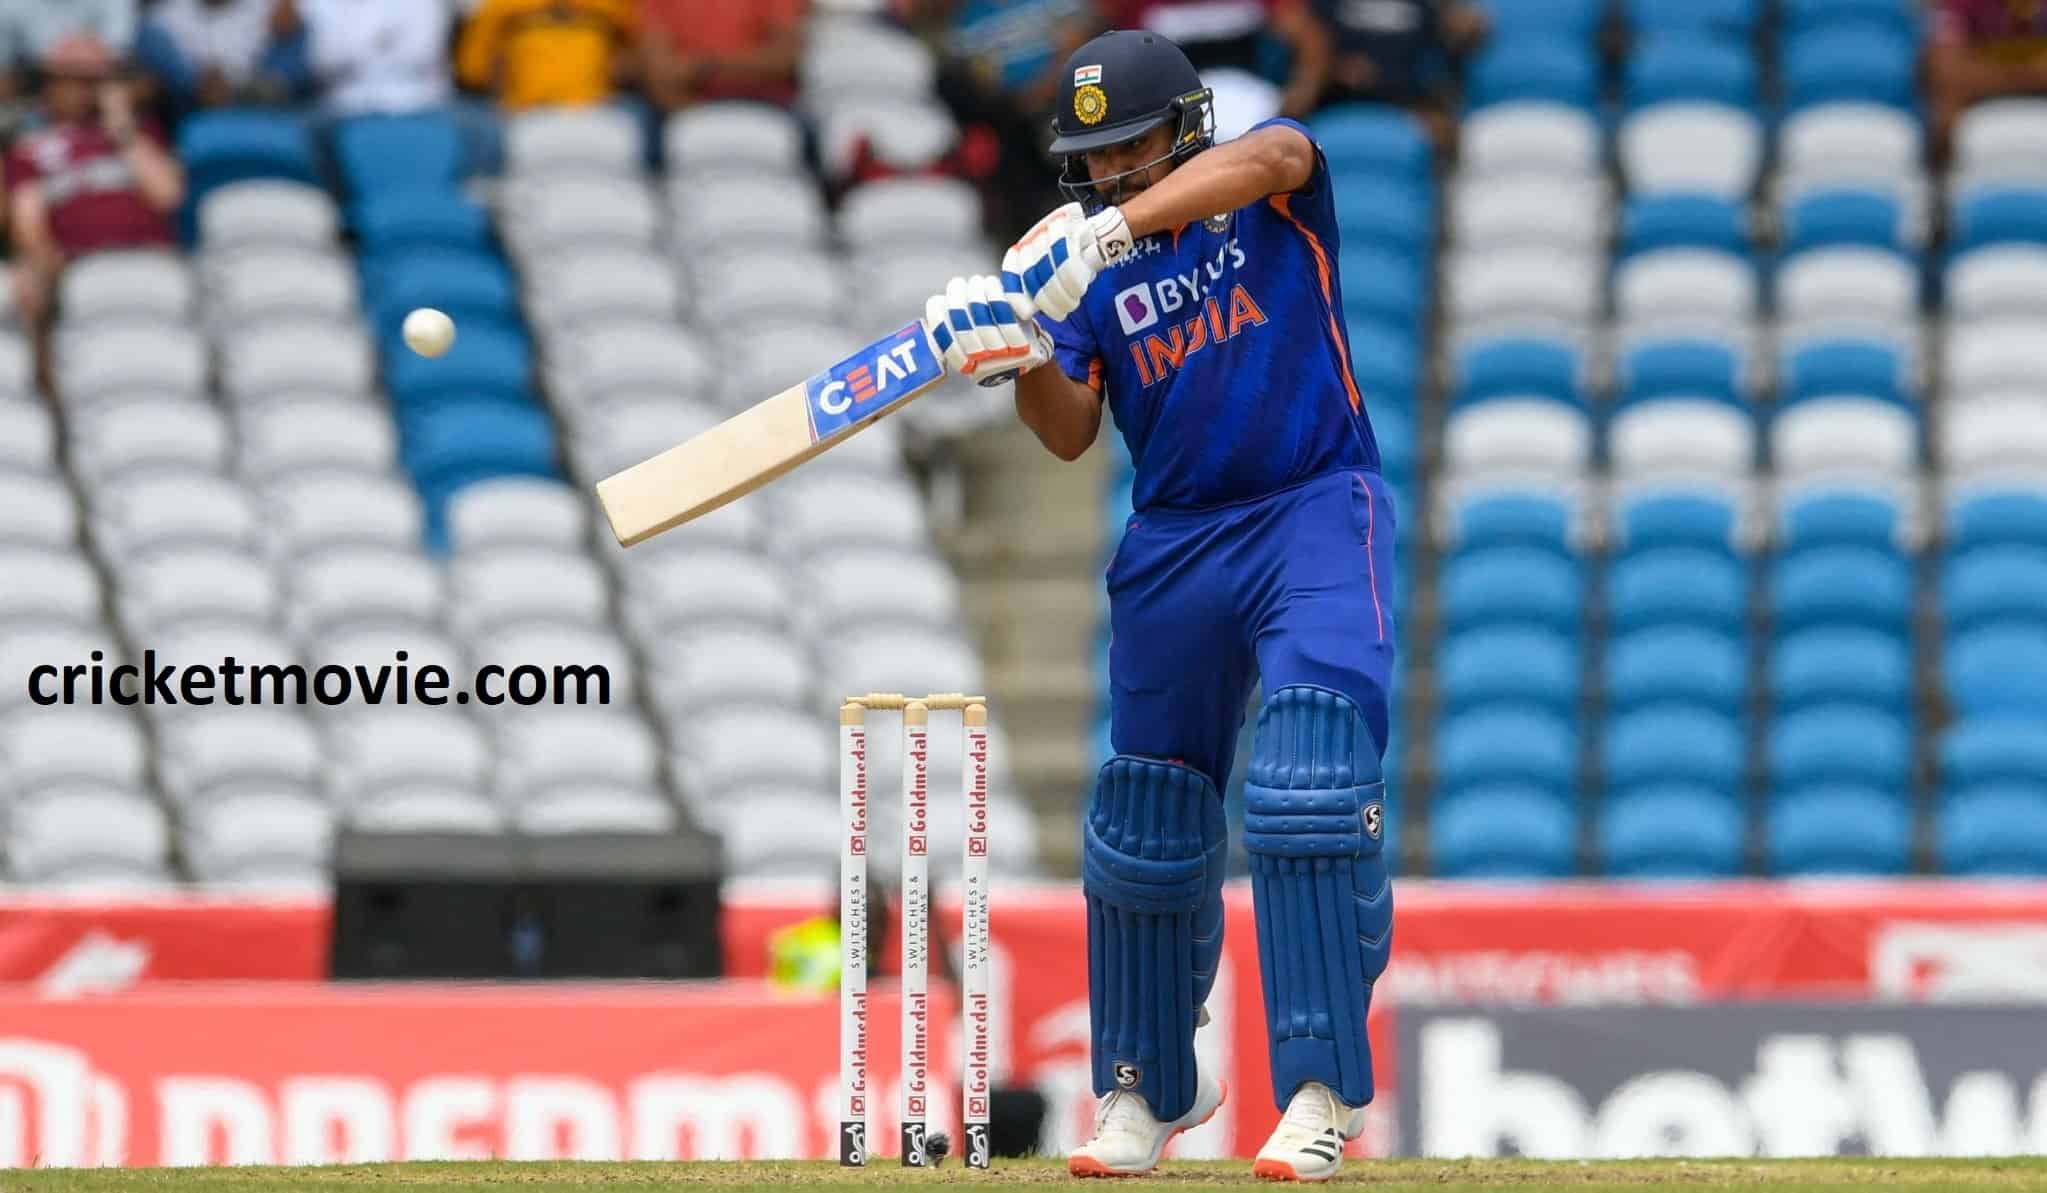 India won 1st T20 against West Indies by 68 runs-cricketmovie.com